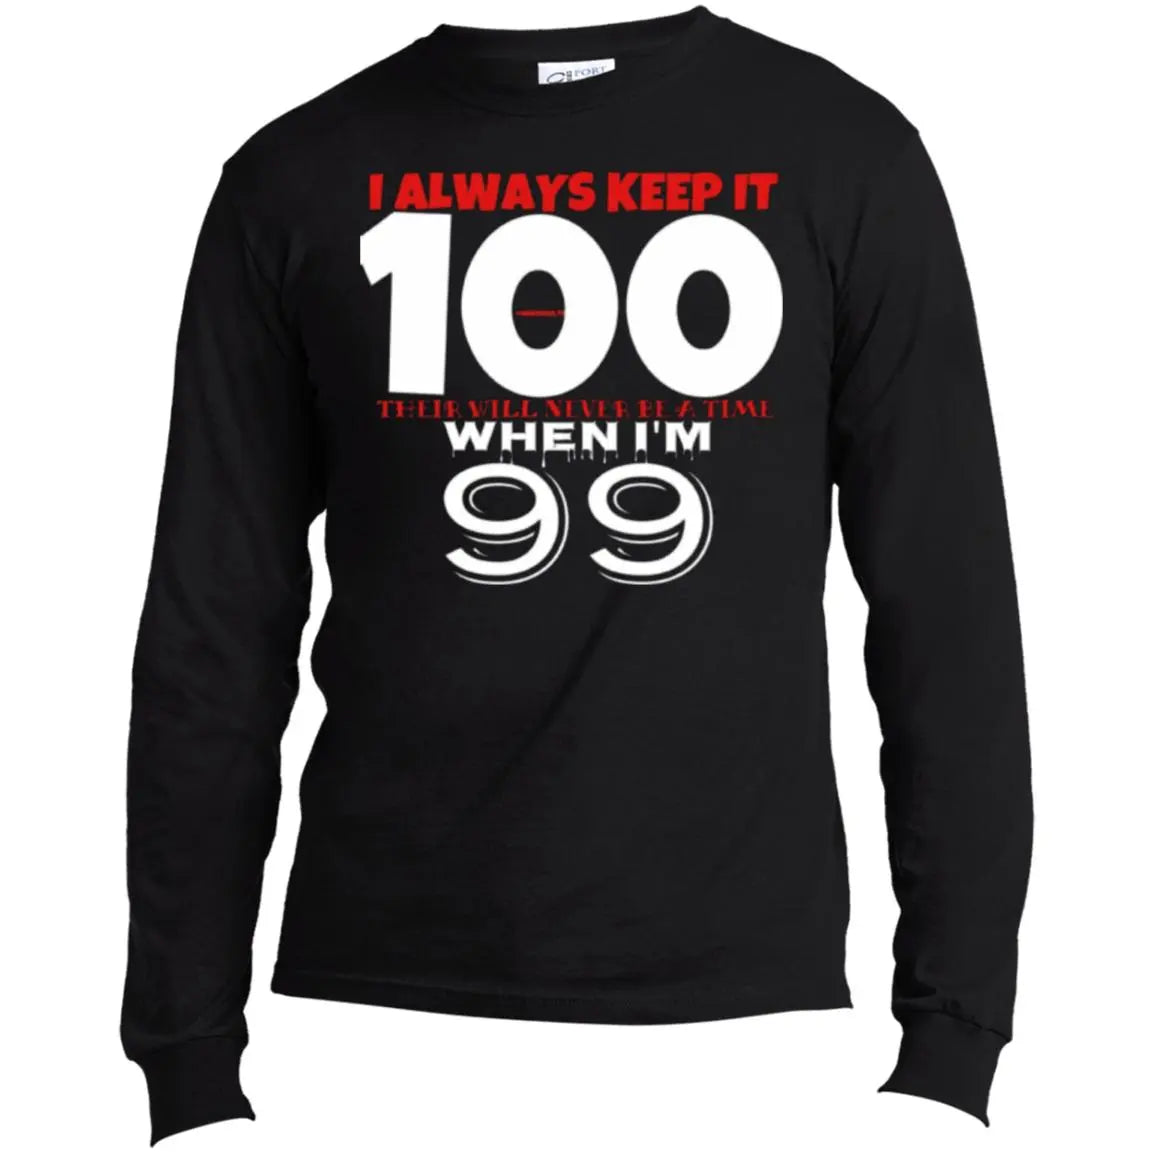 I Always Keep It 100 - Men's Long Sleeve Made in the US T-Shirt CustomCat